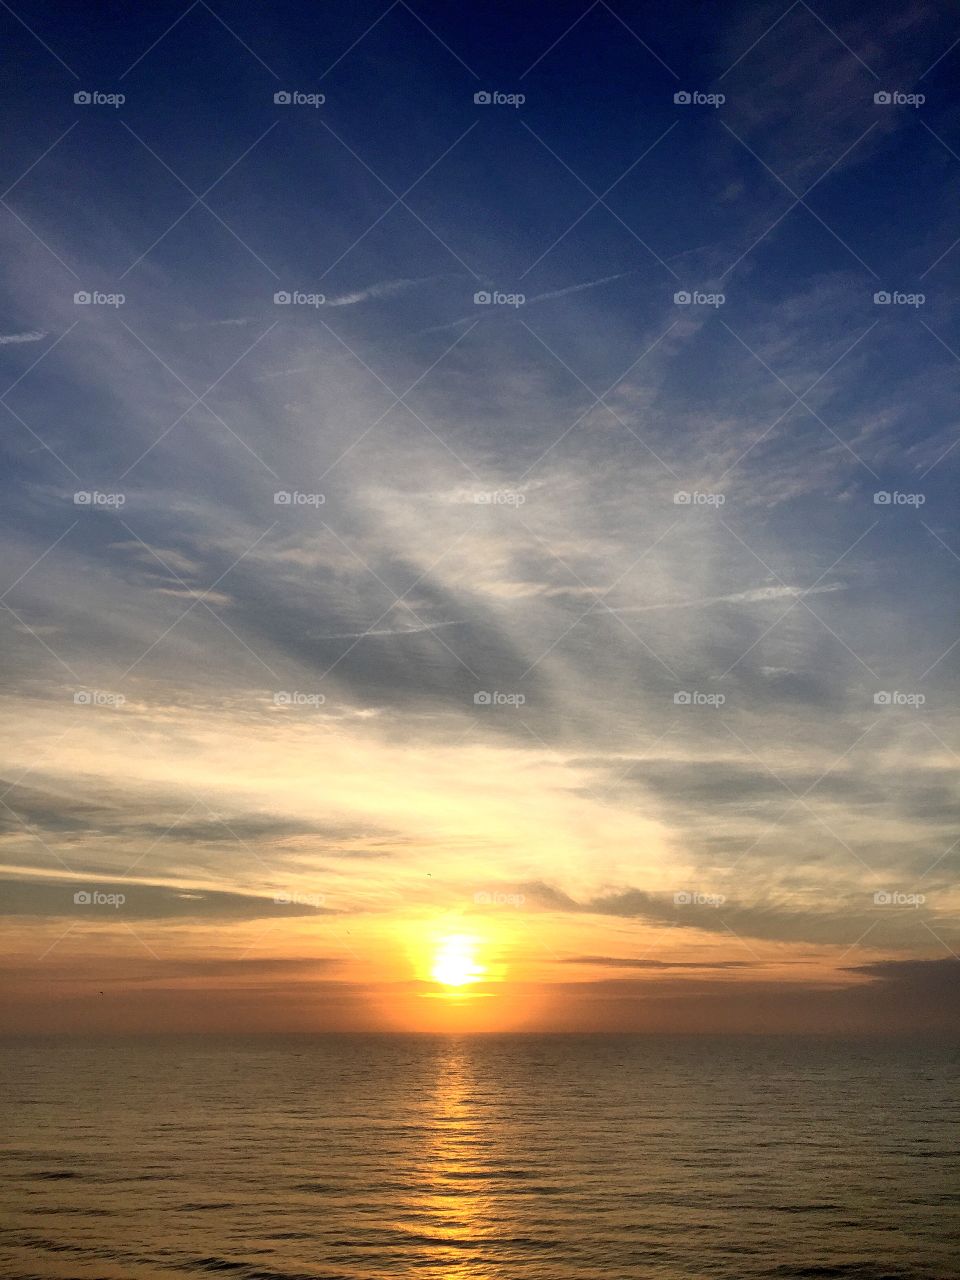 Majestic sunrise over the Atlantic Ocean.